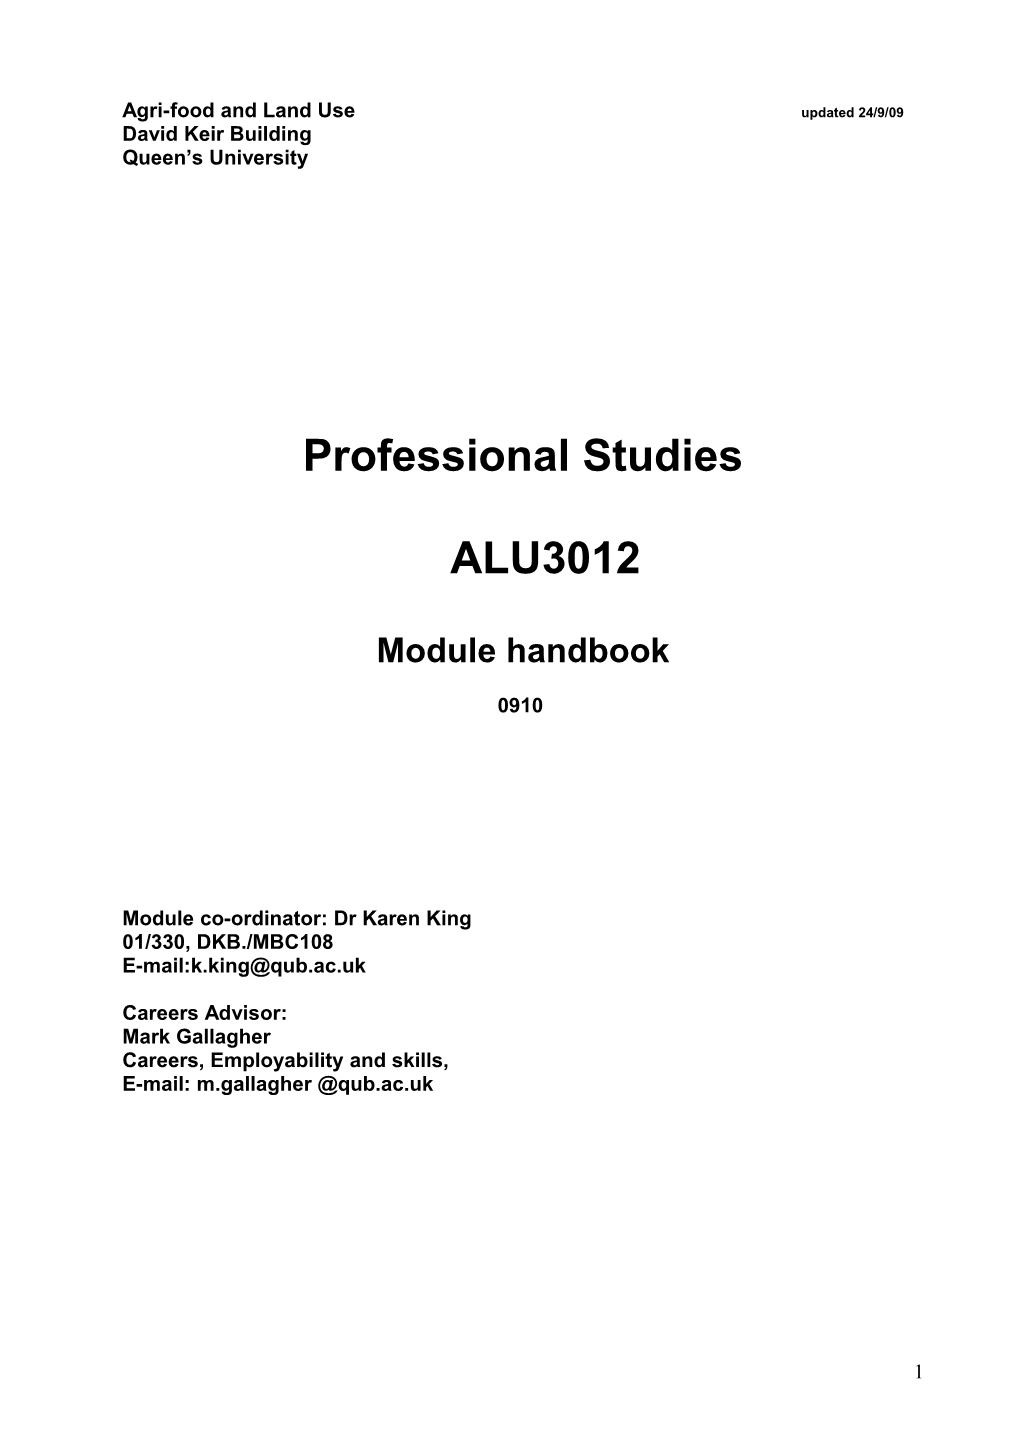 Professional Studies Handbook 0910Doc